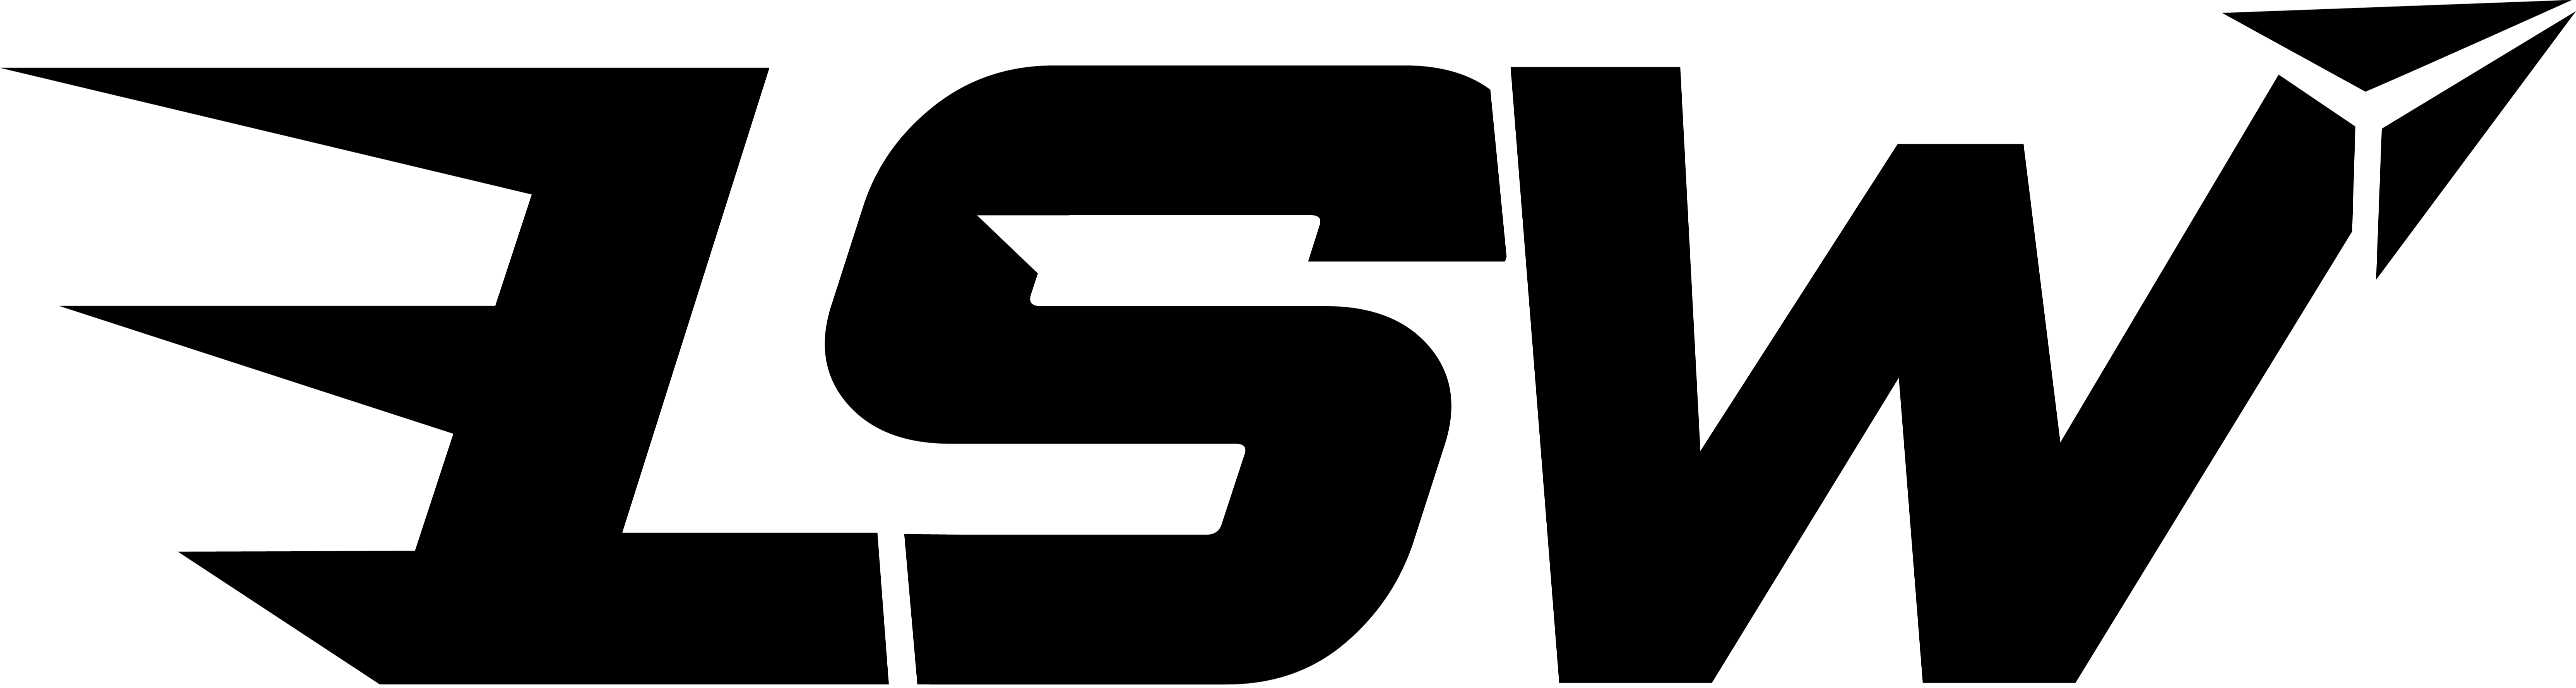 lsw-black-logo
